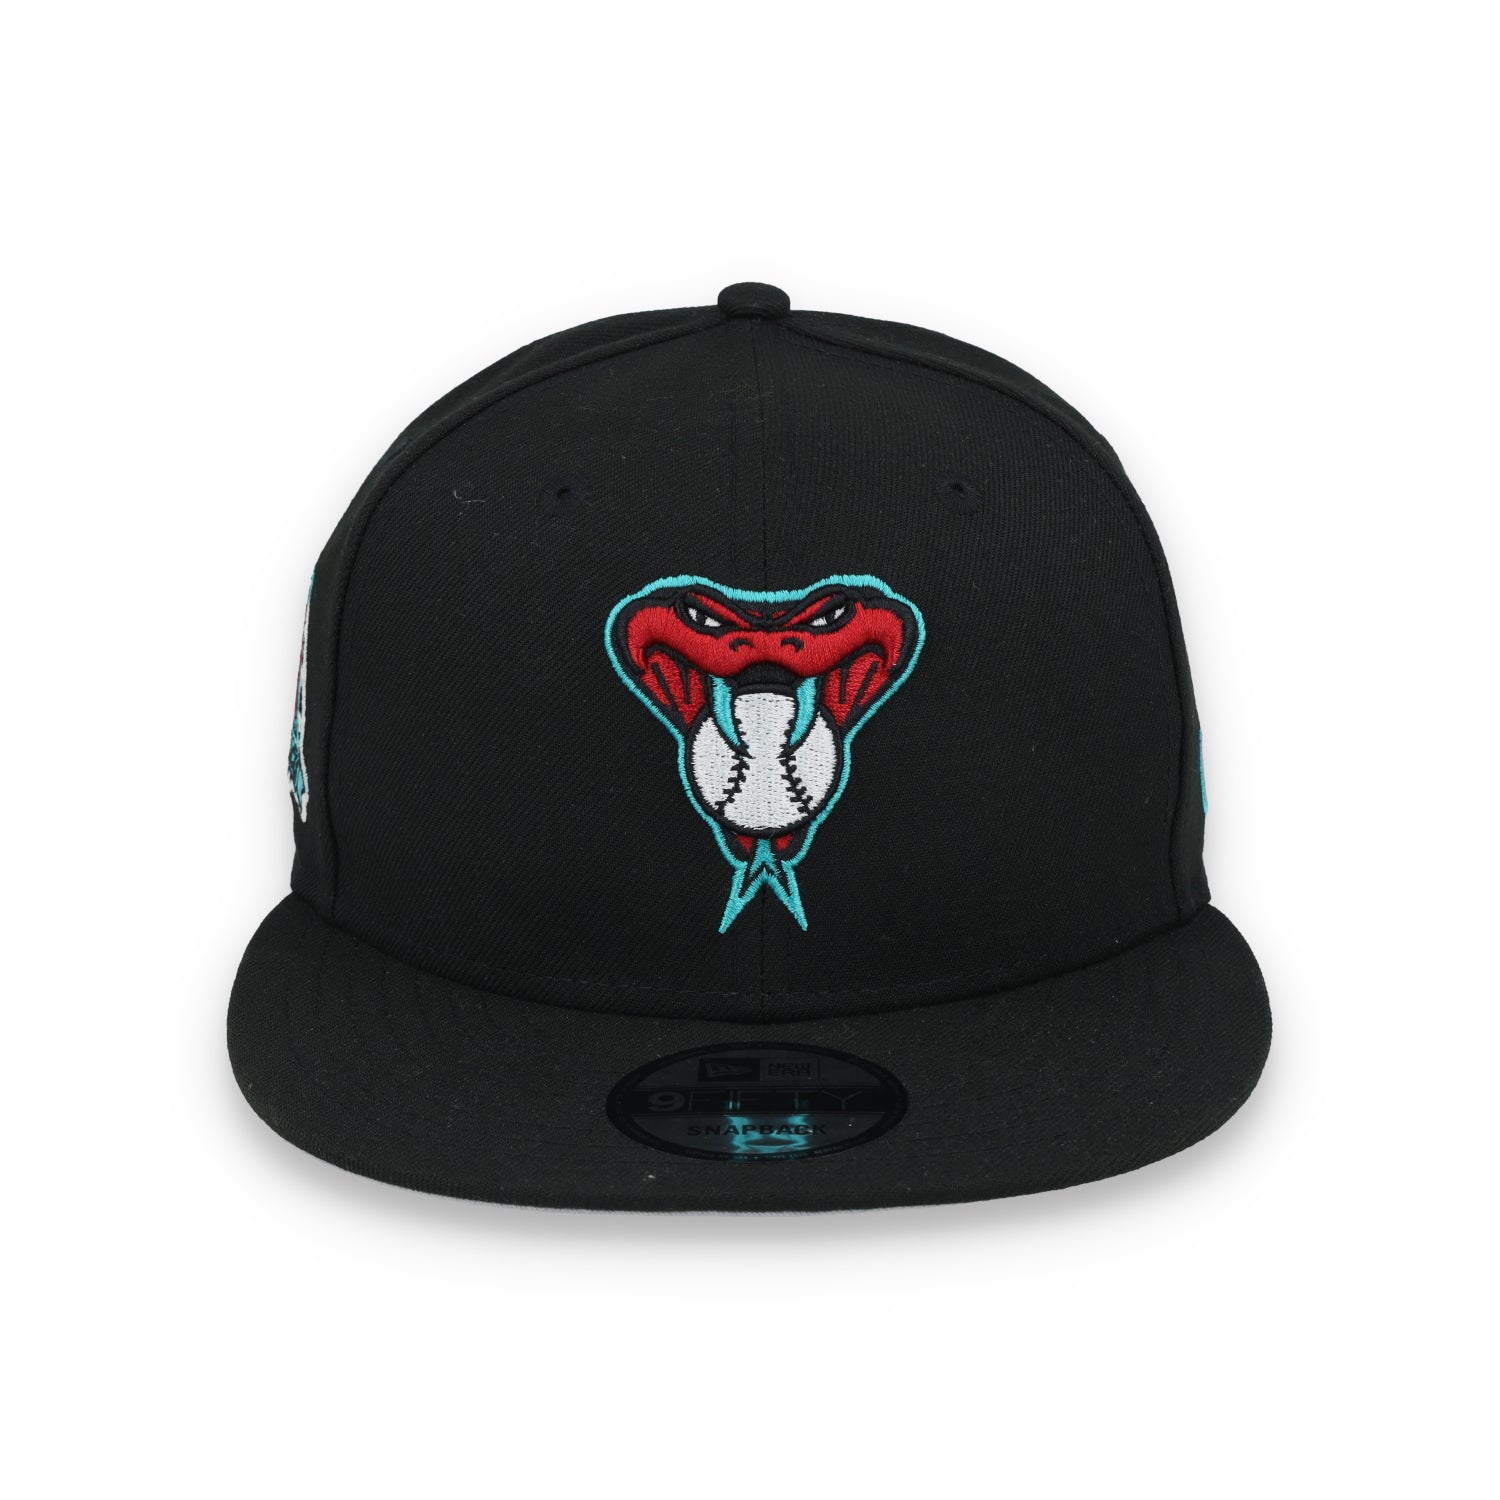 New Era Arizona Diamondbacks Patch E3 9FIFTY Snapback Hat